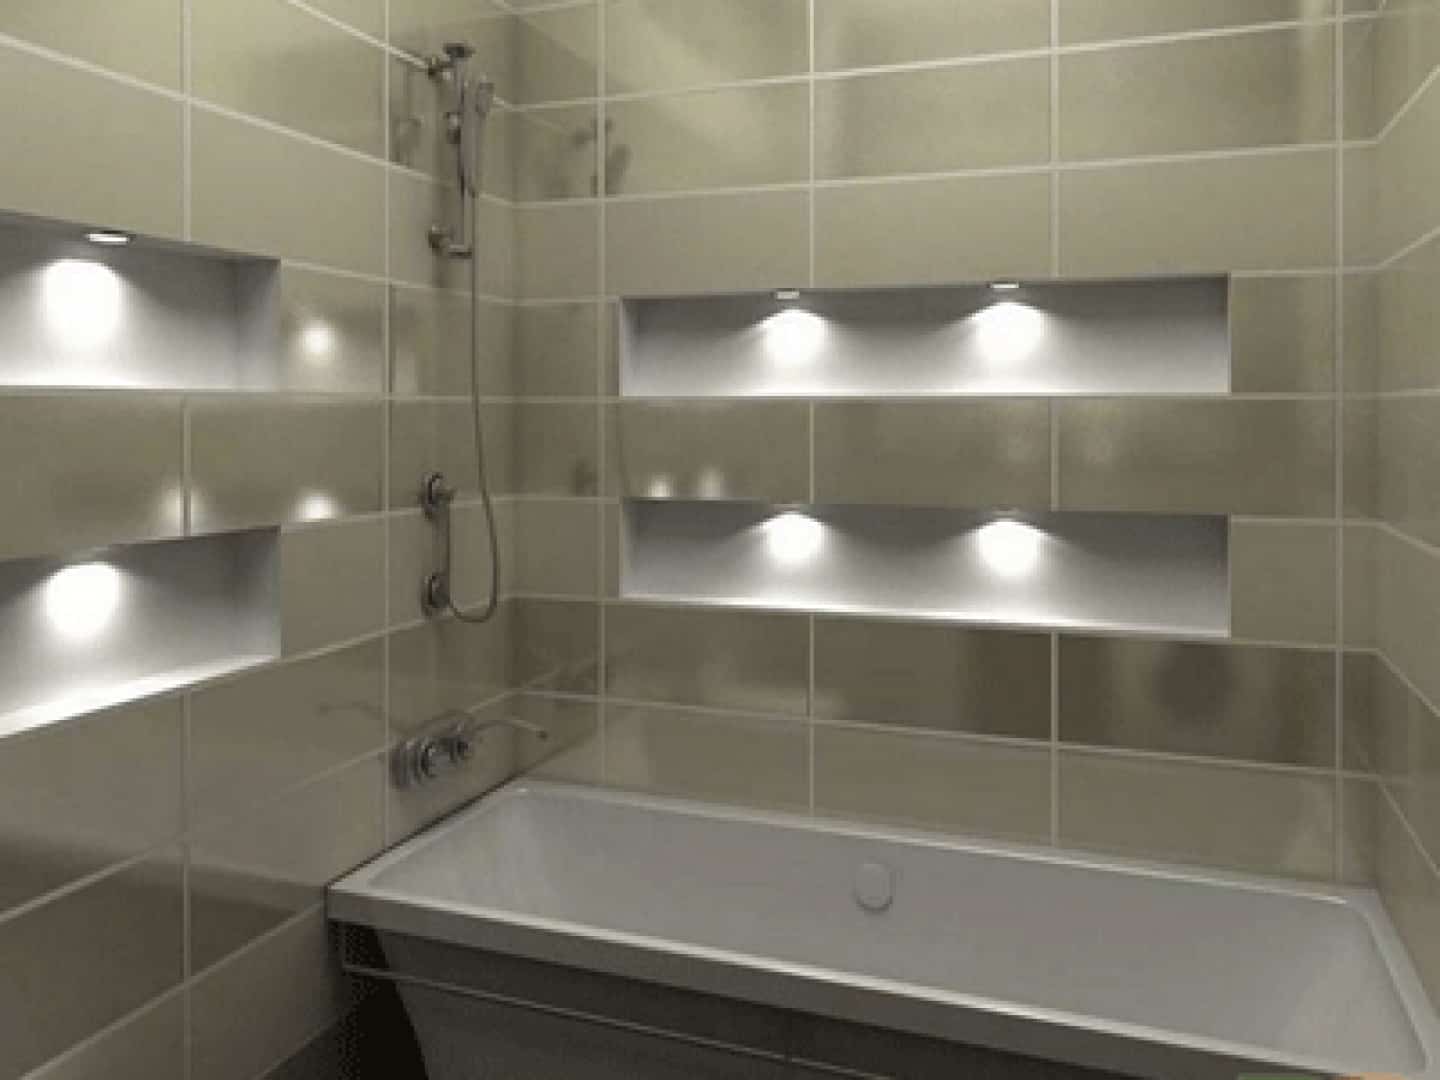 Tile Designs For Bathrooms Interior Design